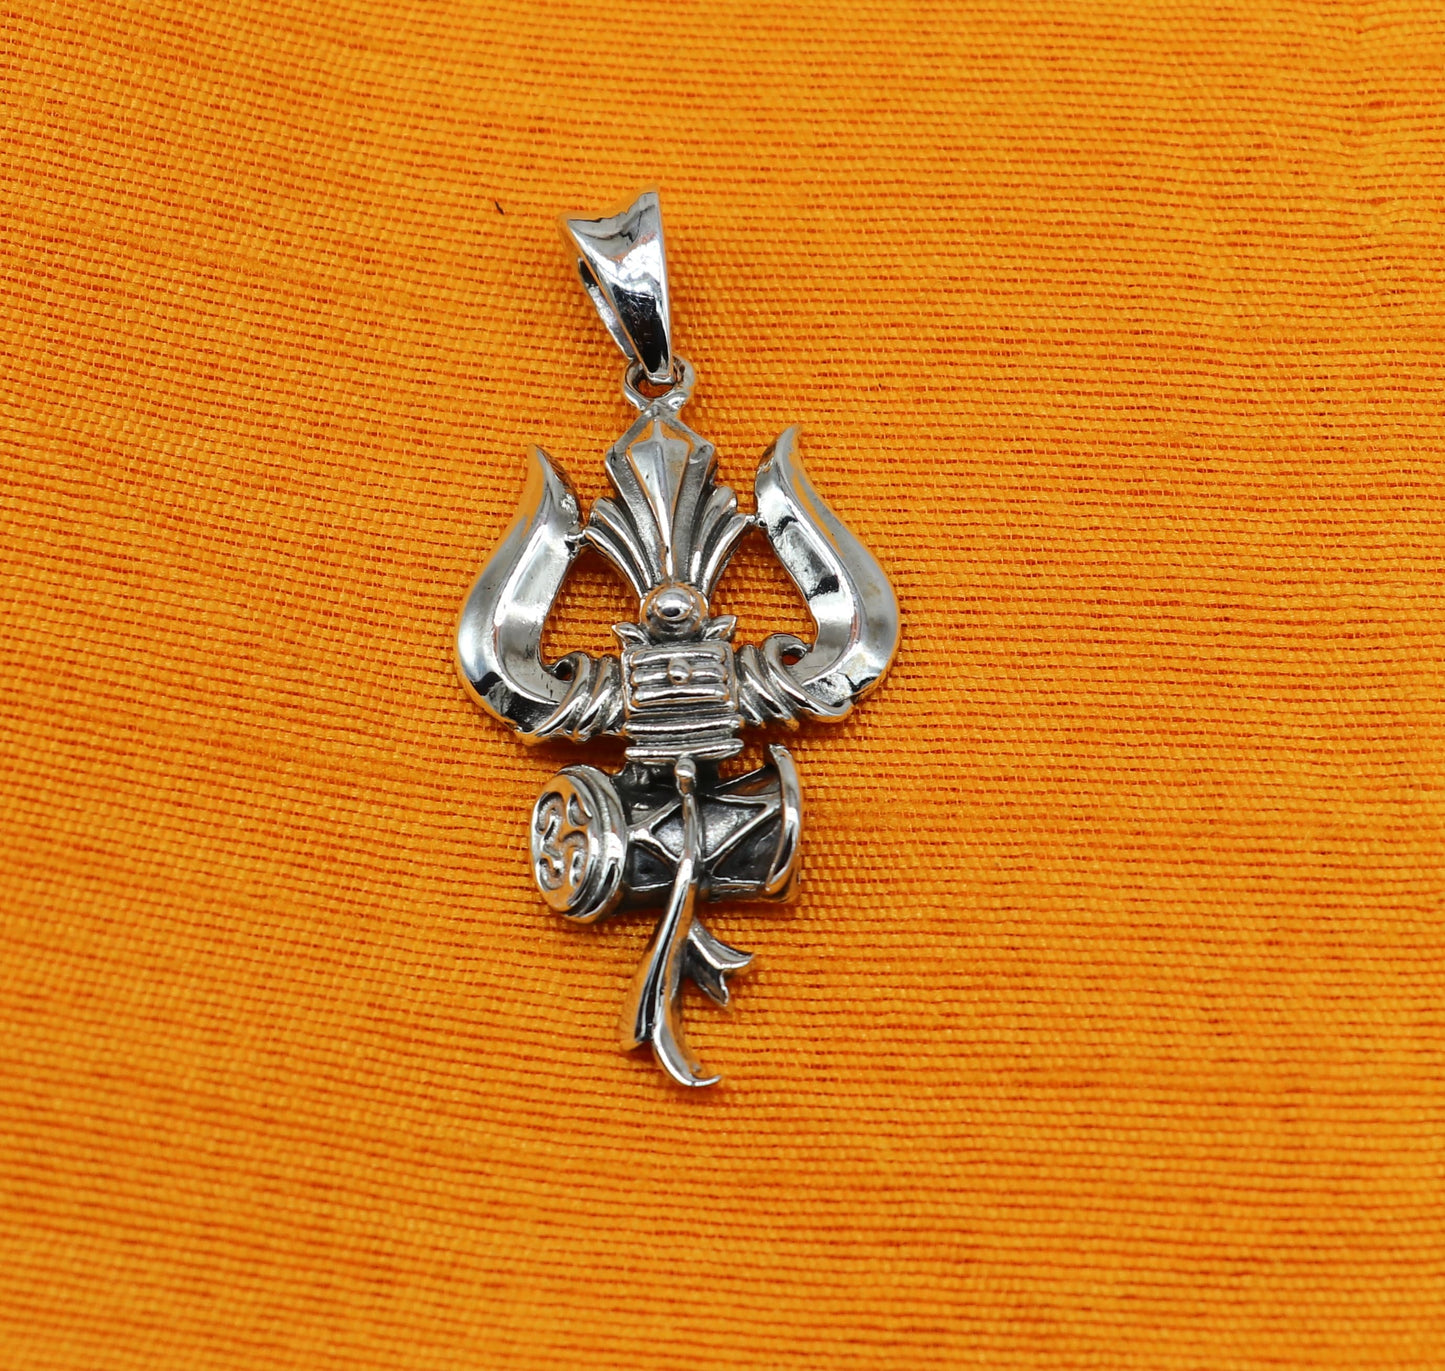 925 sterling silver Hindu idol Lord Shiva trident/trishul pendant, amazing vintage design gifting locket pendant customized jewelry ssp524 - TRIBAL ORNAMENTS